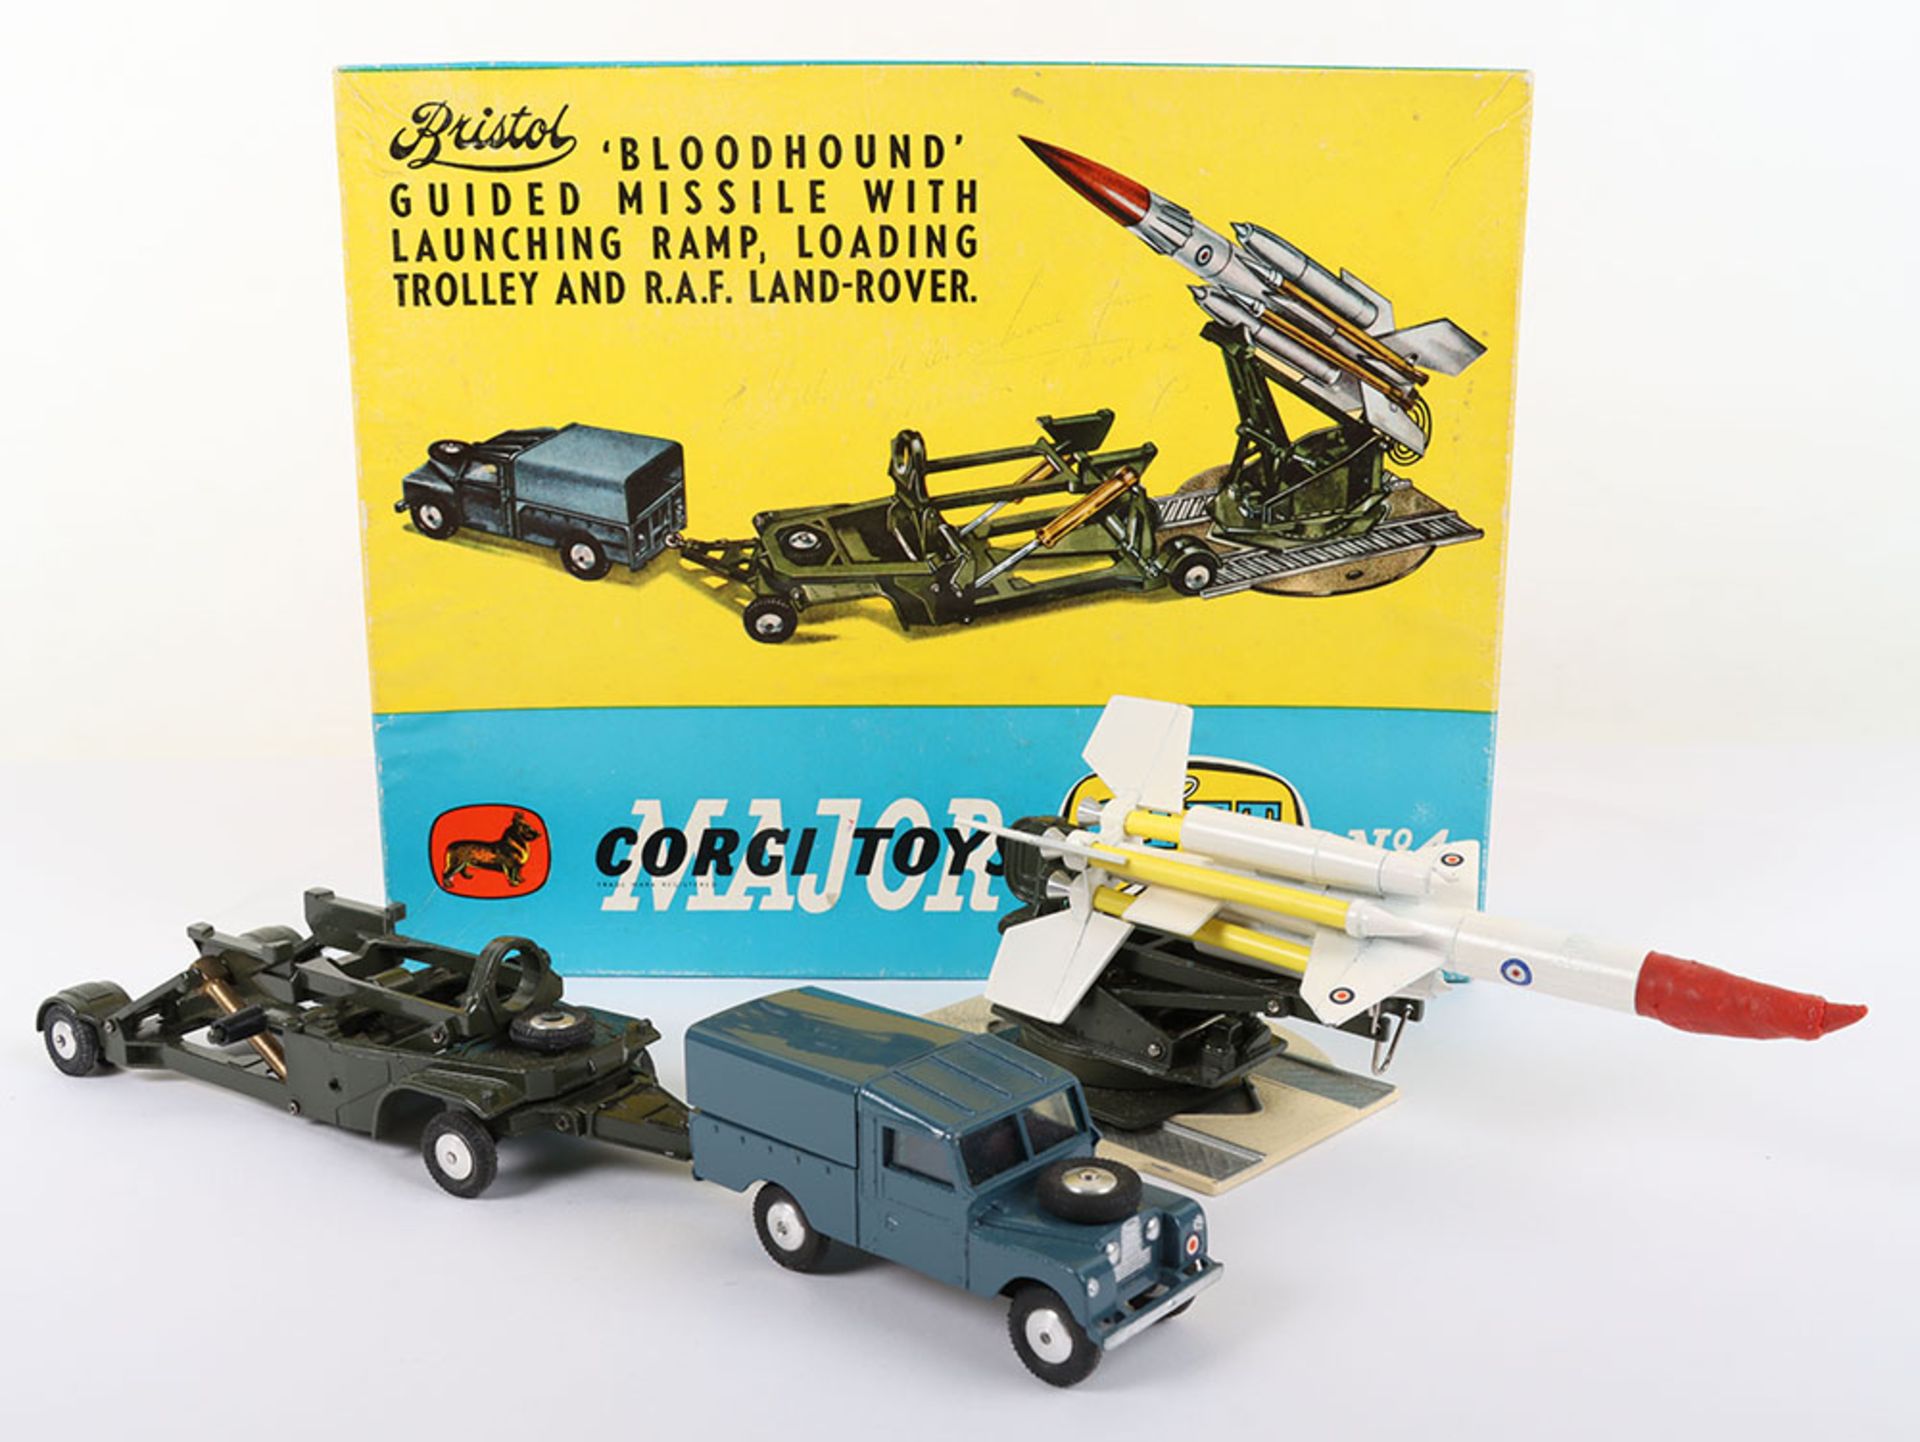 Corgi Major Toys Gift Set No 4 Bristol ‘Bloodhound’ guided missile with launching Ramp - Bild 3 aus 5